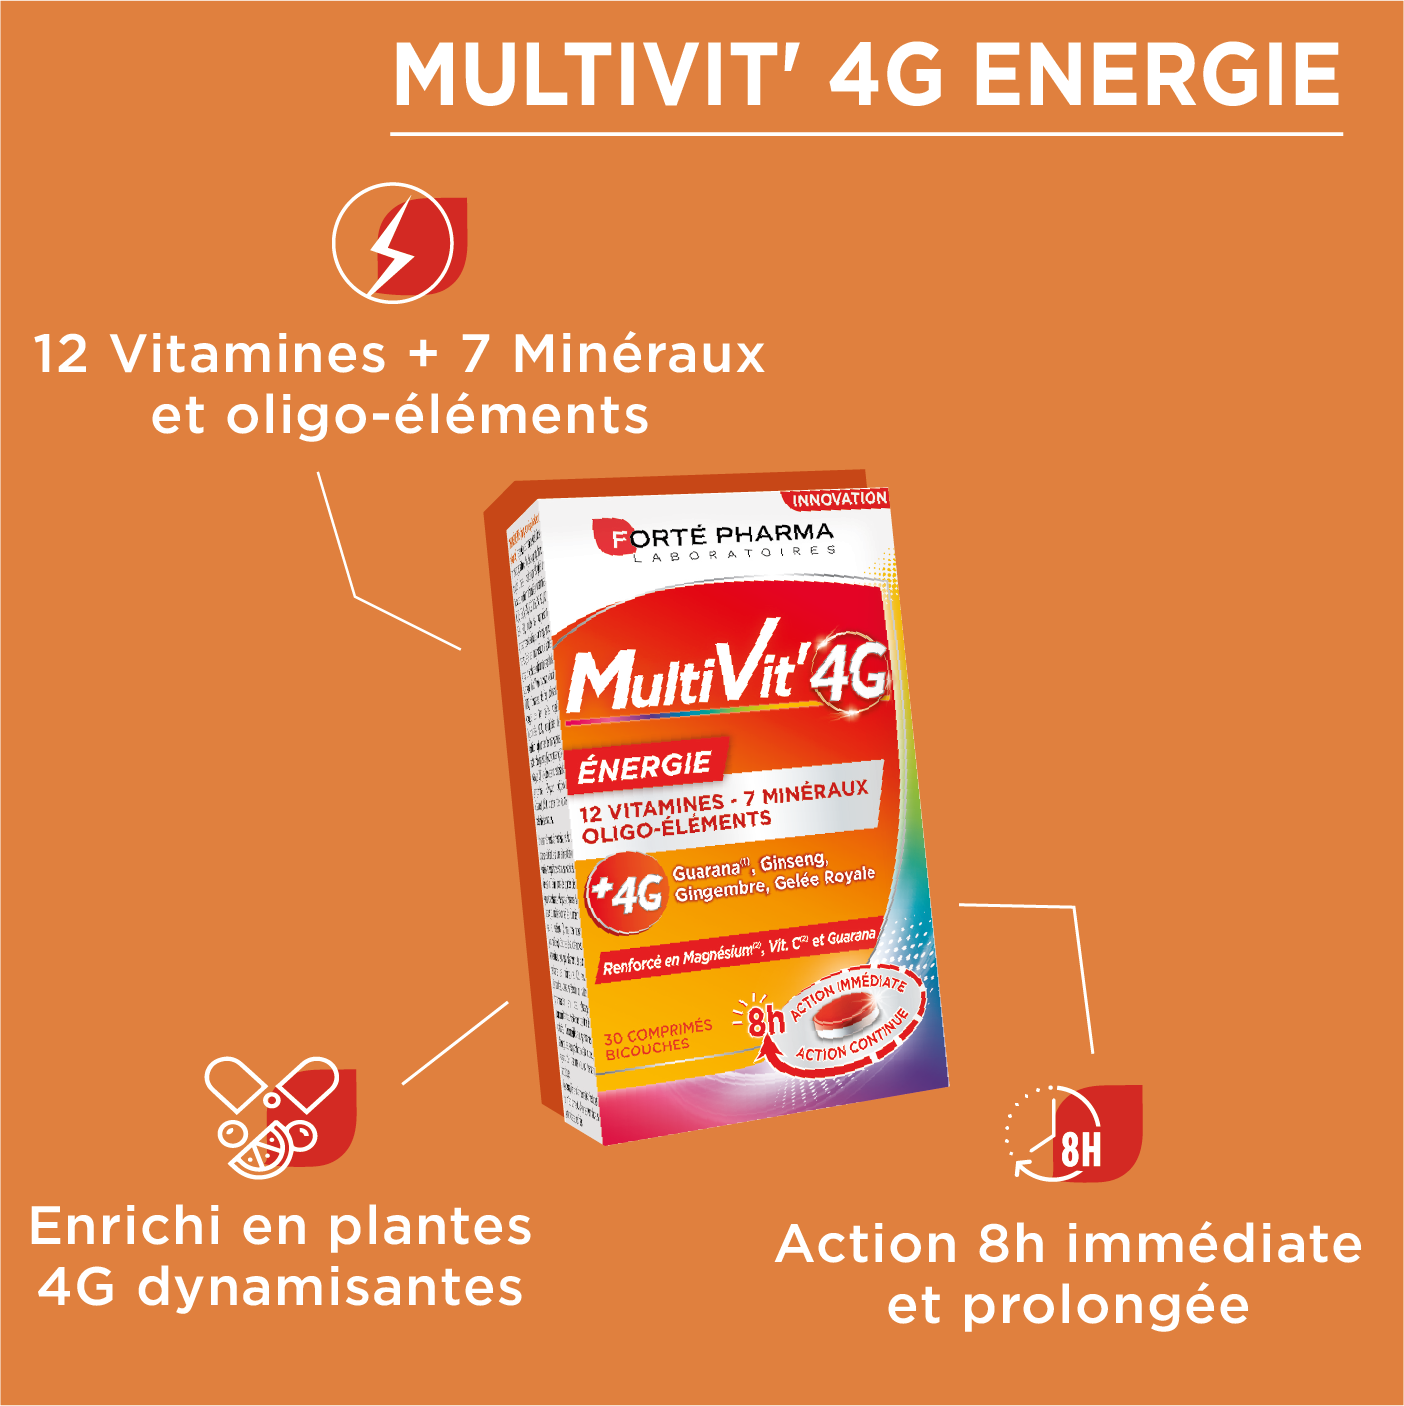 MultiVit'4G Energie